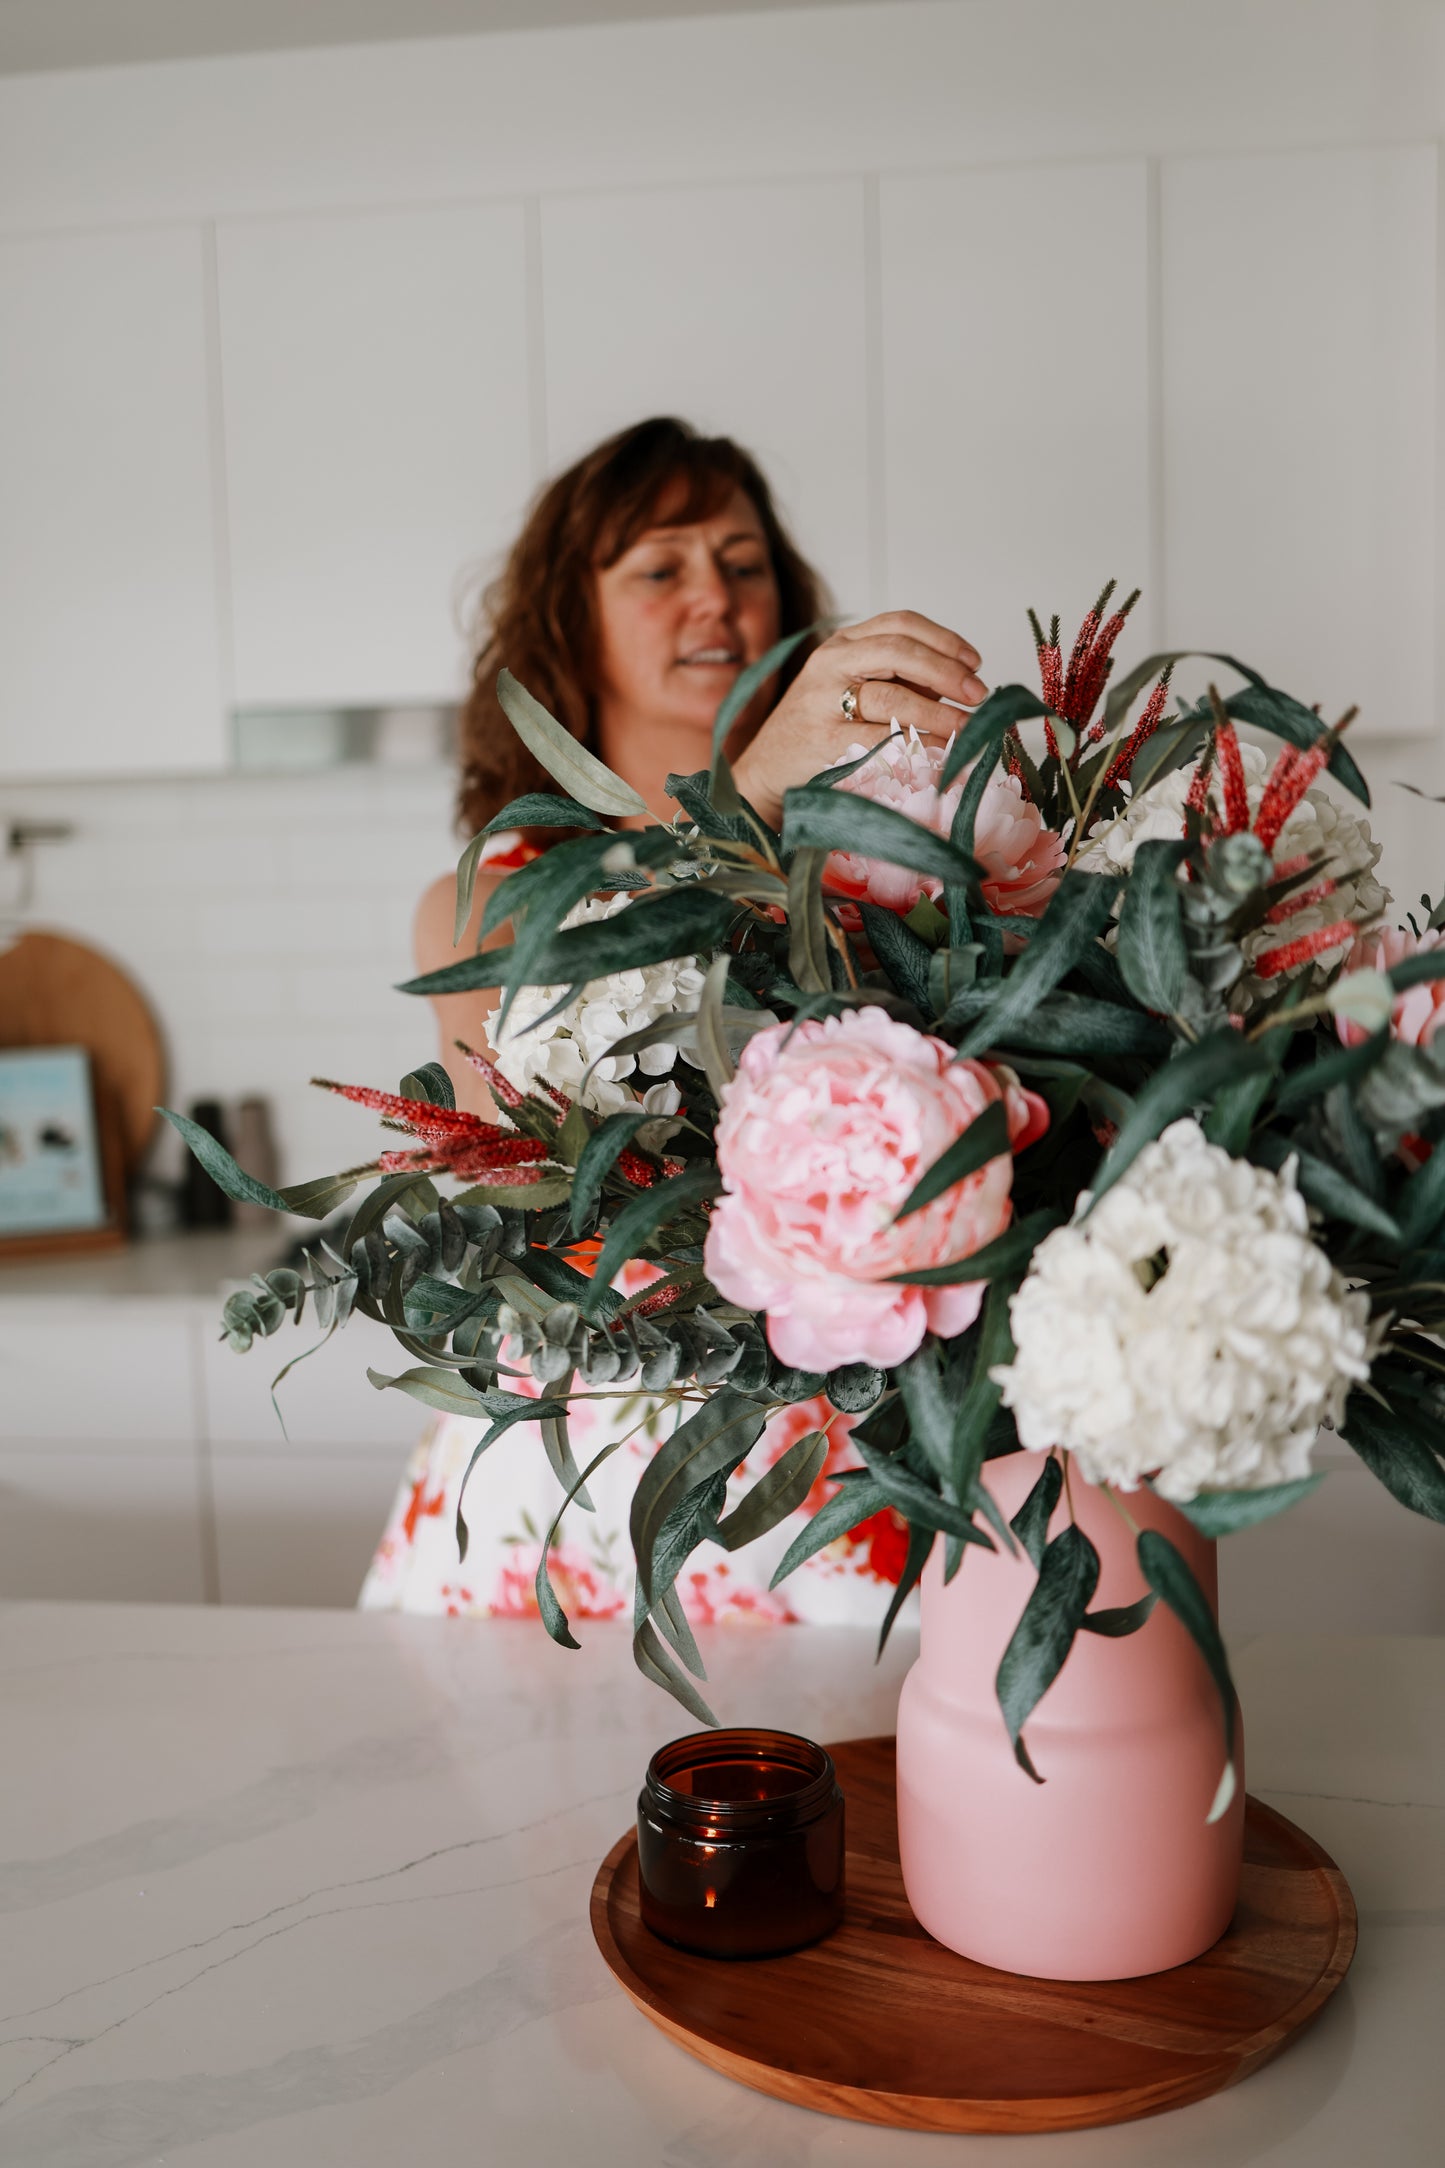 Pink Garden Blooms in Ceramic Vase - Realistic Artificial Flowers